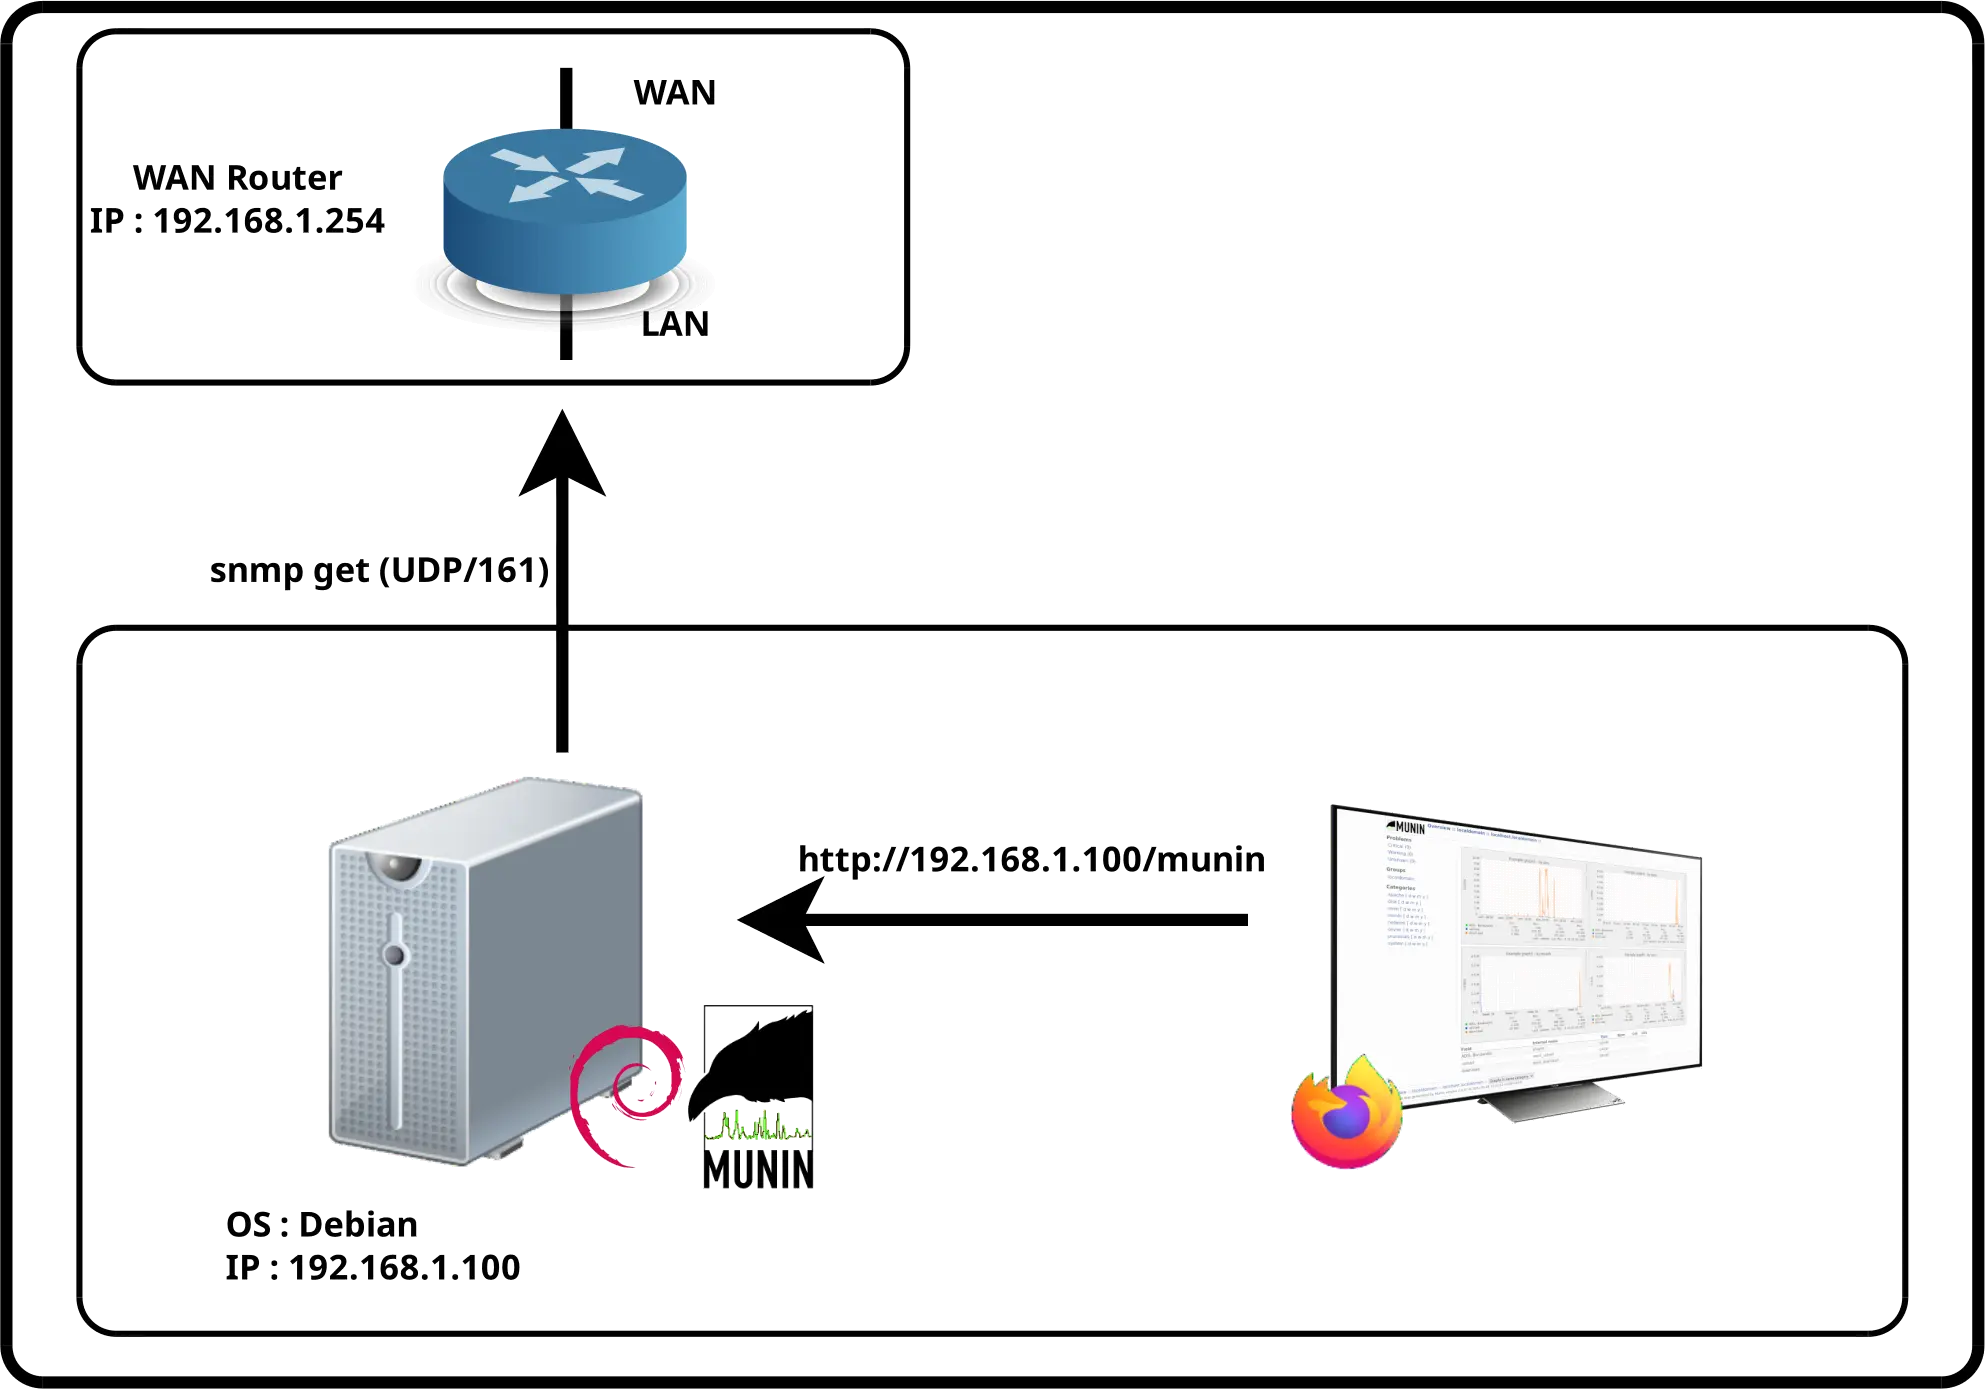 Munin architecture to monitor bandwidth WAN via SNMP